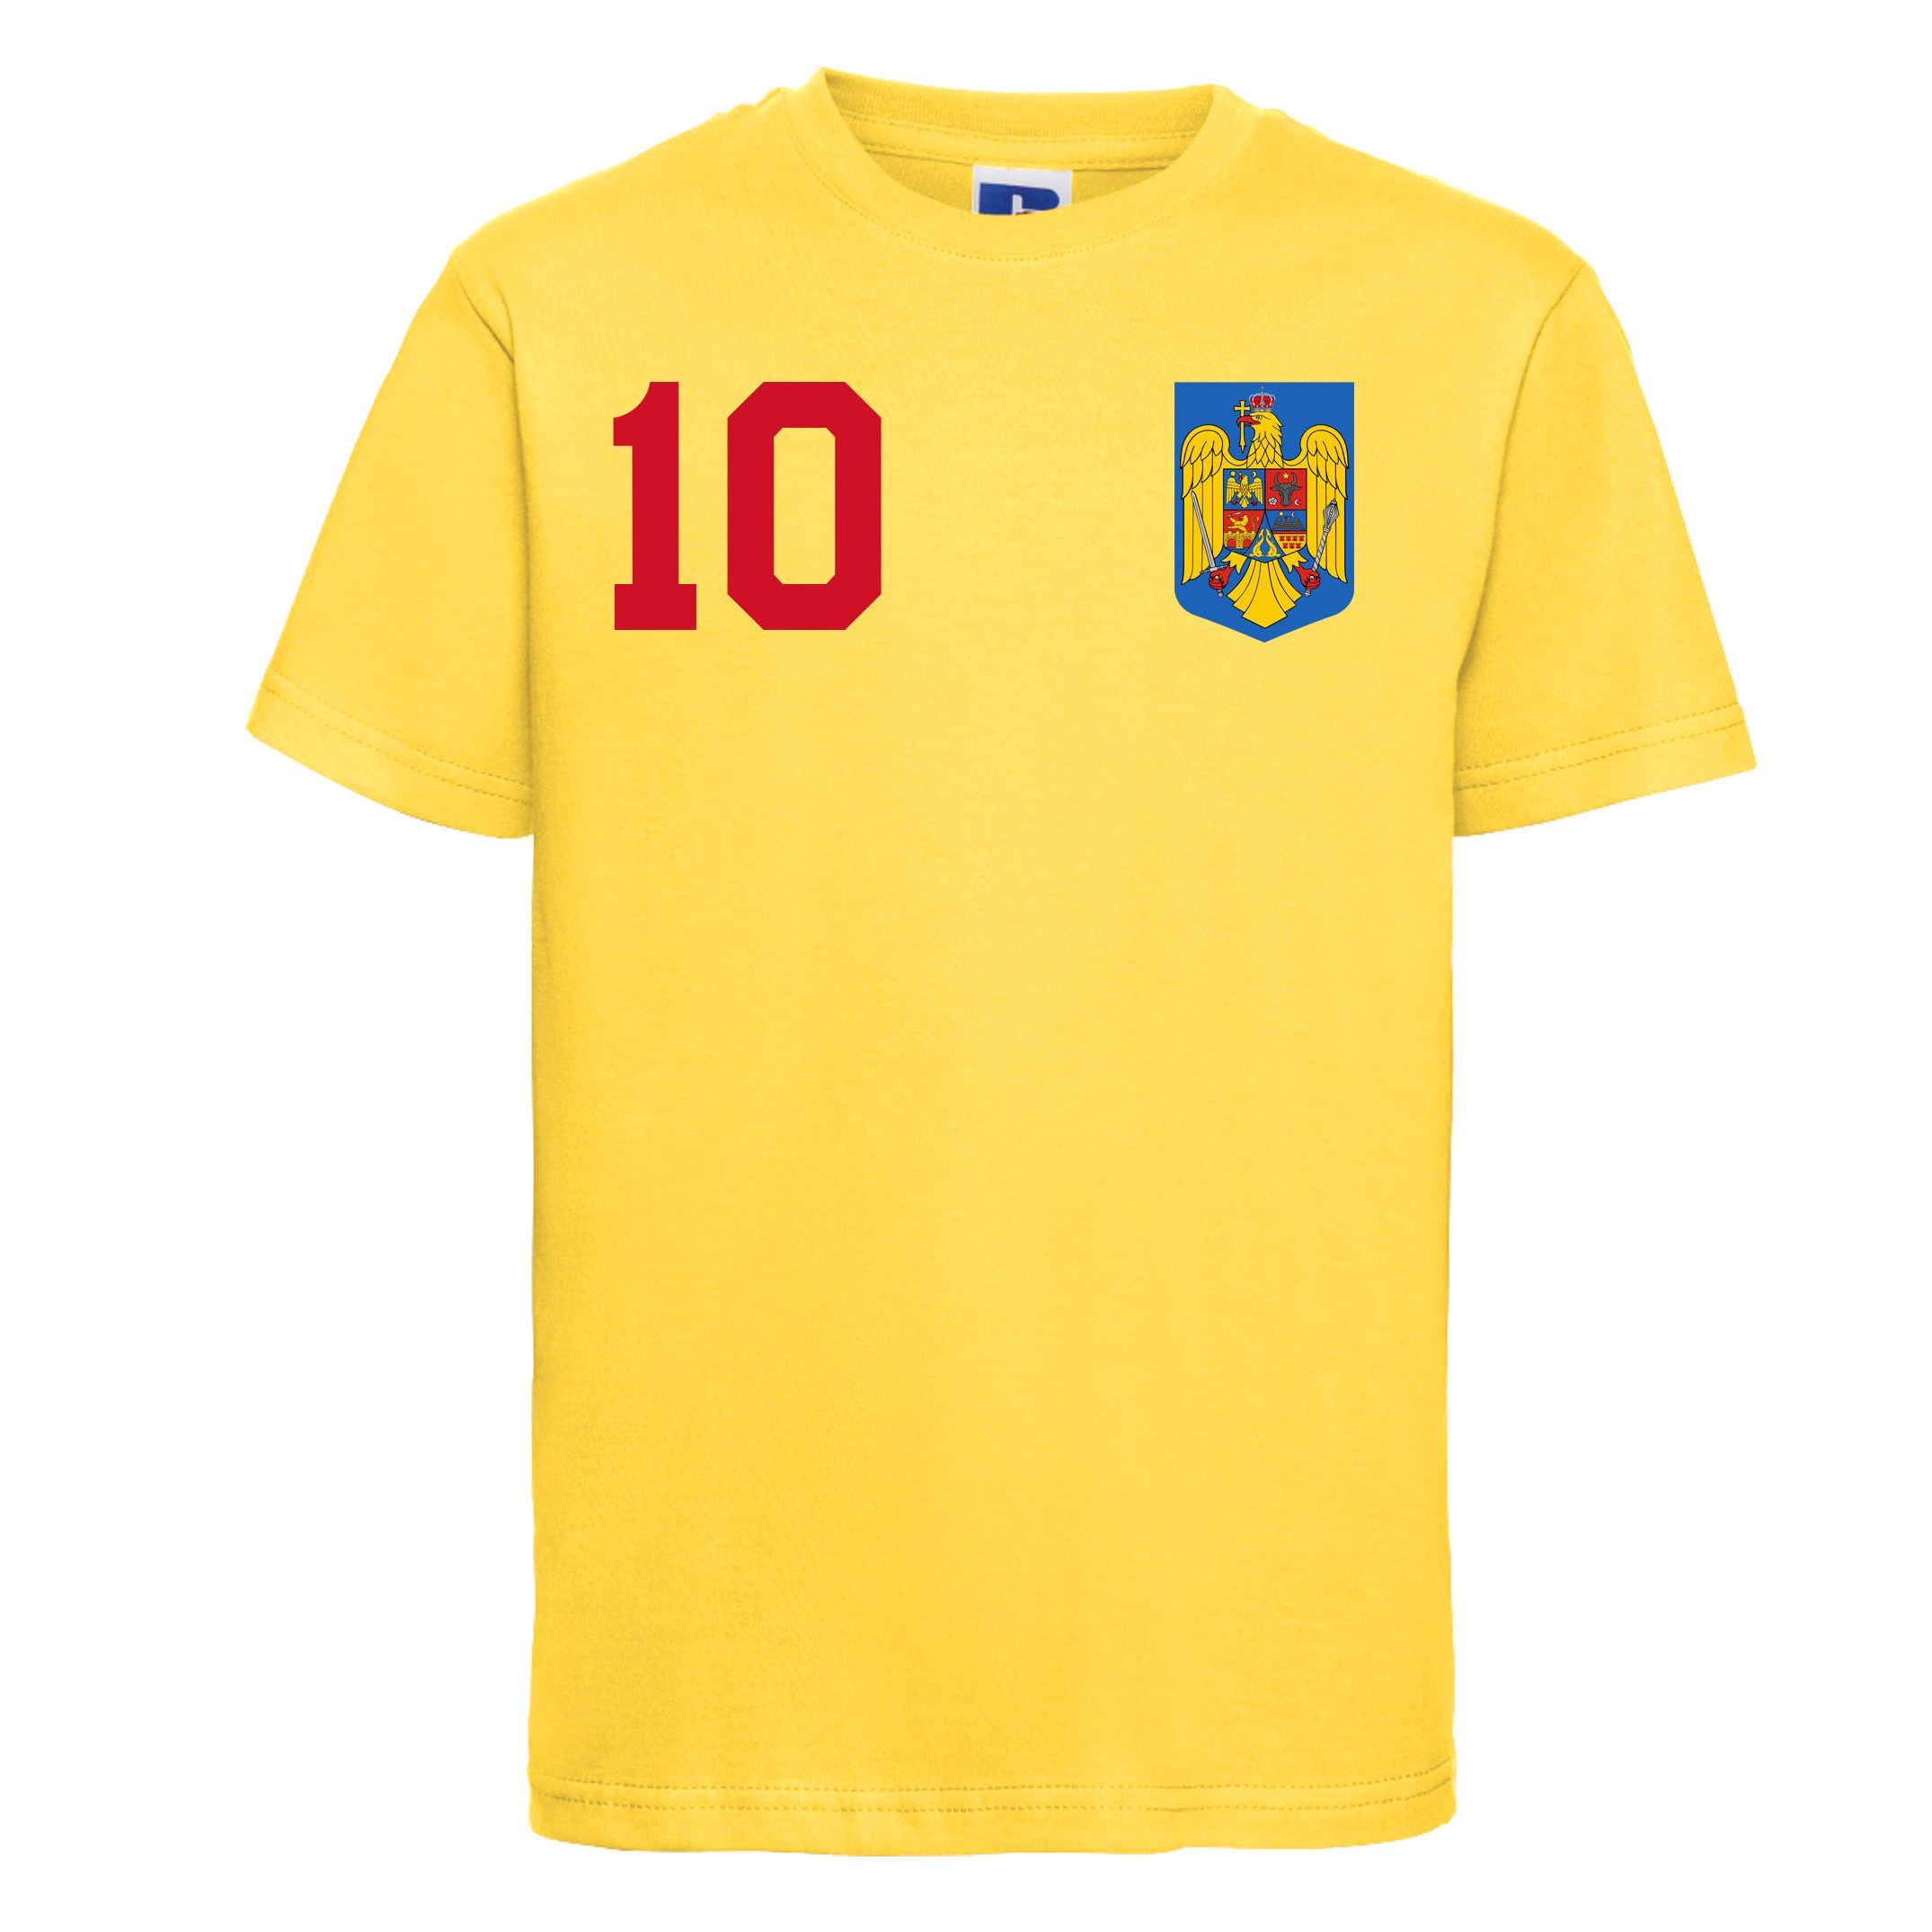 Youth Designz T-Shirt Rumänien Kinder T-Shirt im Fußball Trikot Look mit trendigem Print